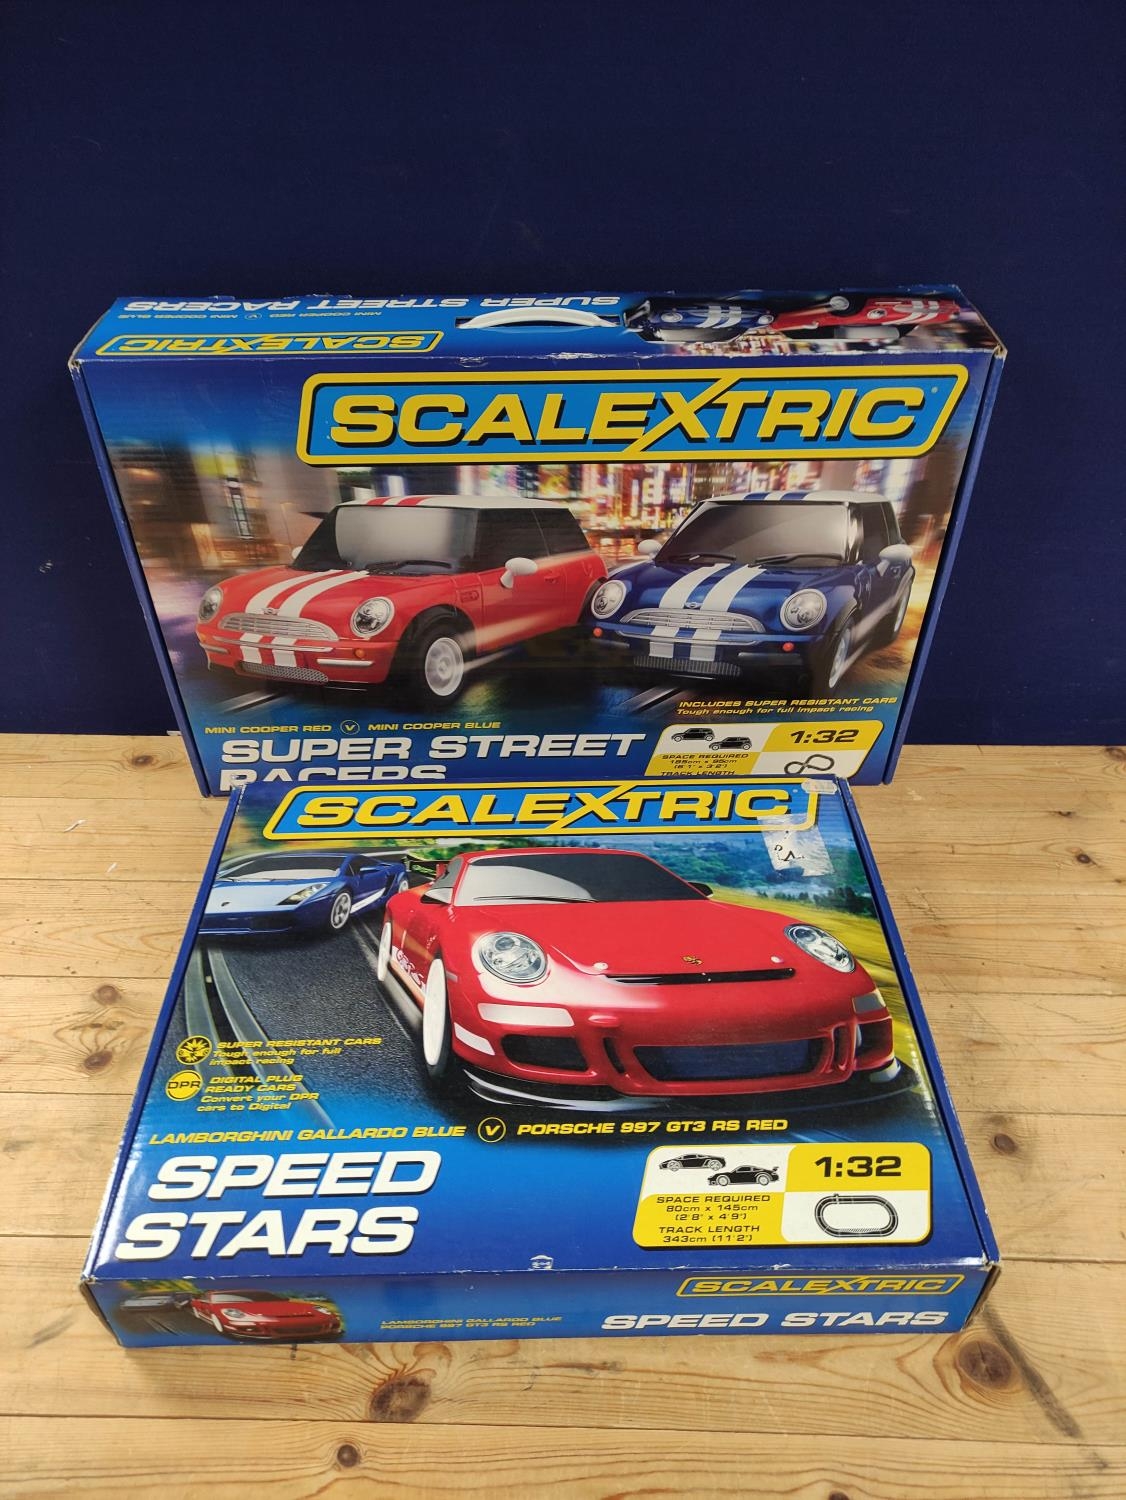 Two boxed Scalextric sets to include Speed Stars Lamborghini Gallardo and Porsche 997 set C1243, and